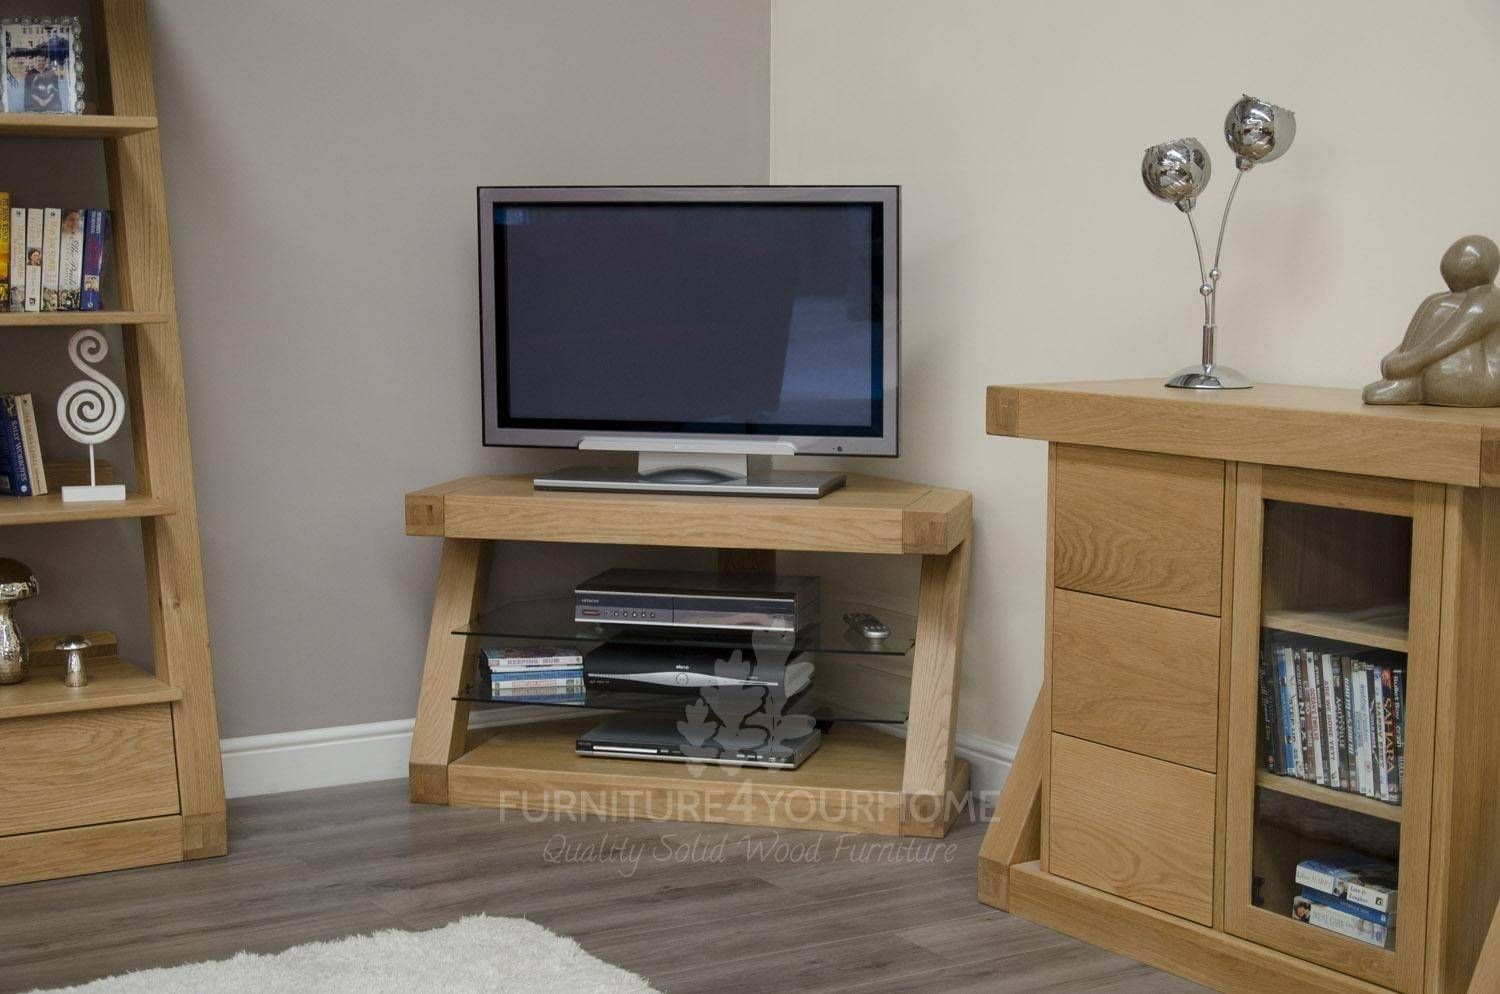 Z Solid Oak Designer Corner Tv Unit | Furniture4yourhome Within Tv Cabinets Corner Units (View 15 of 15)